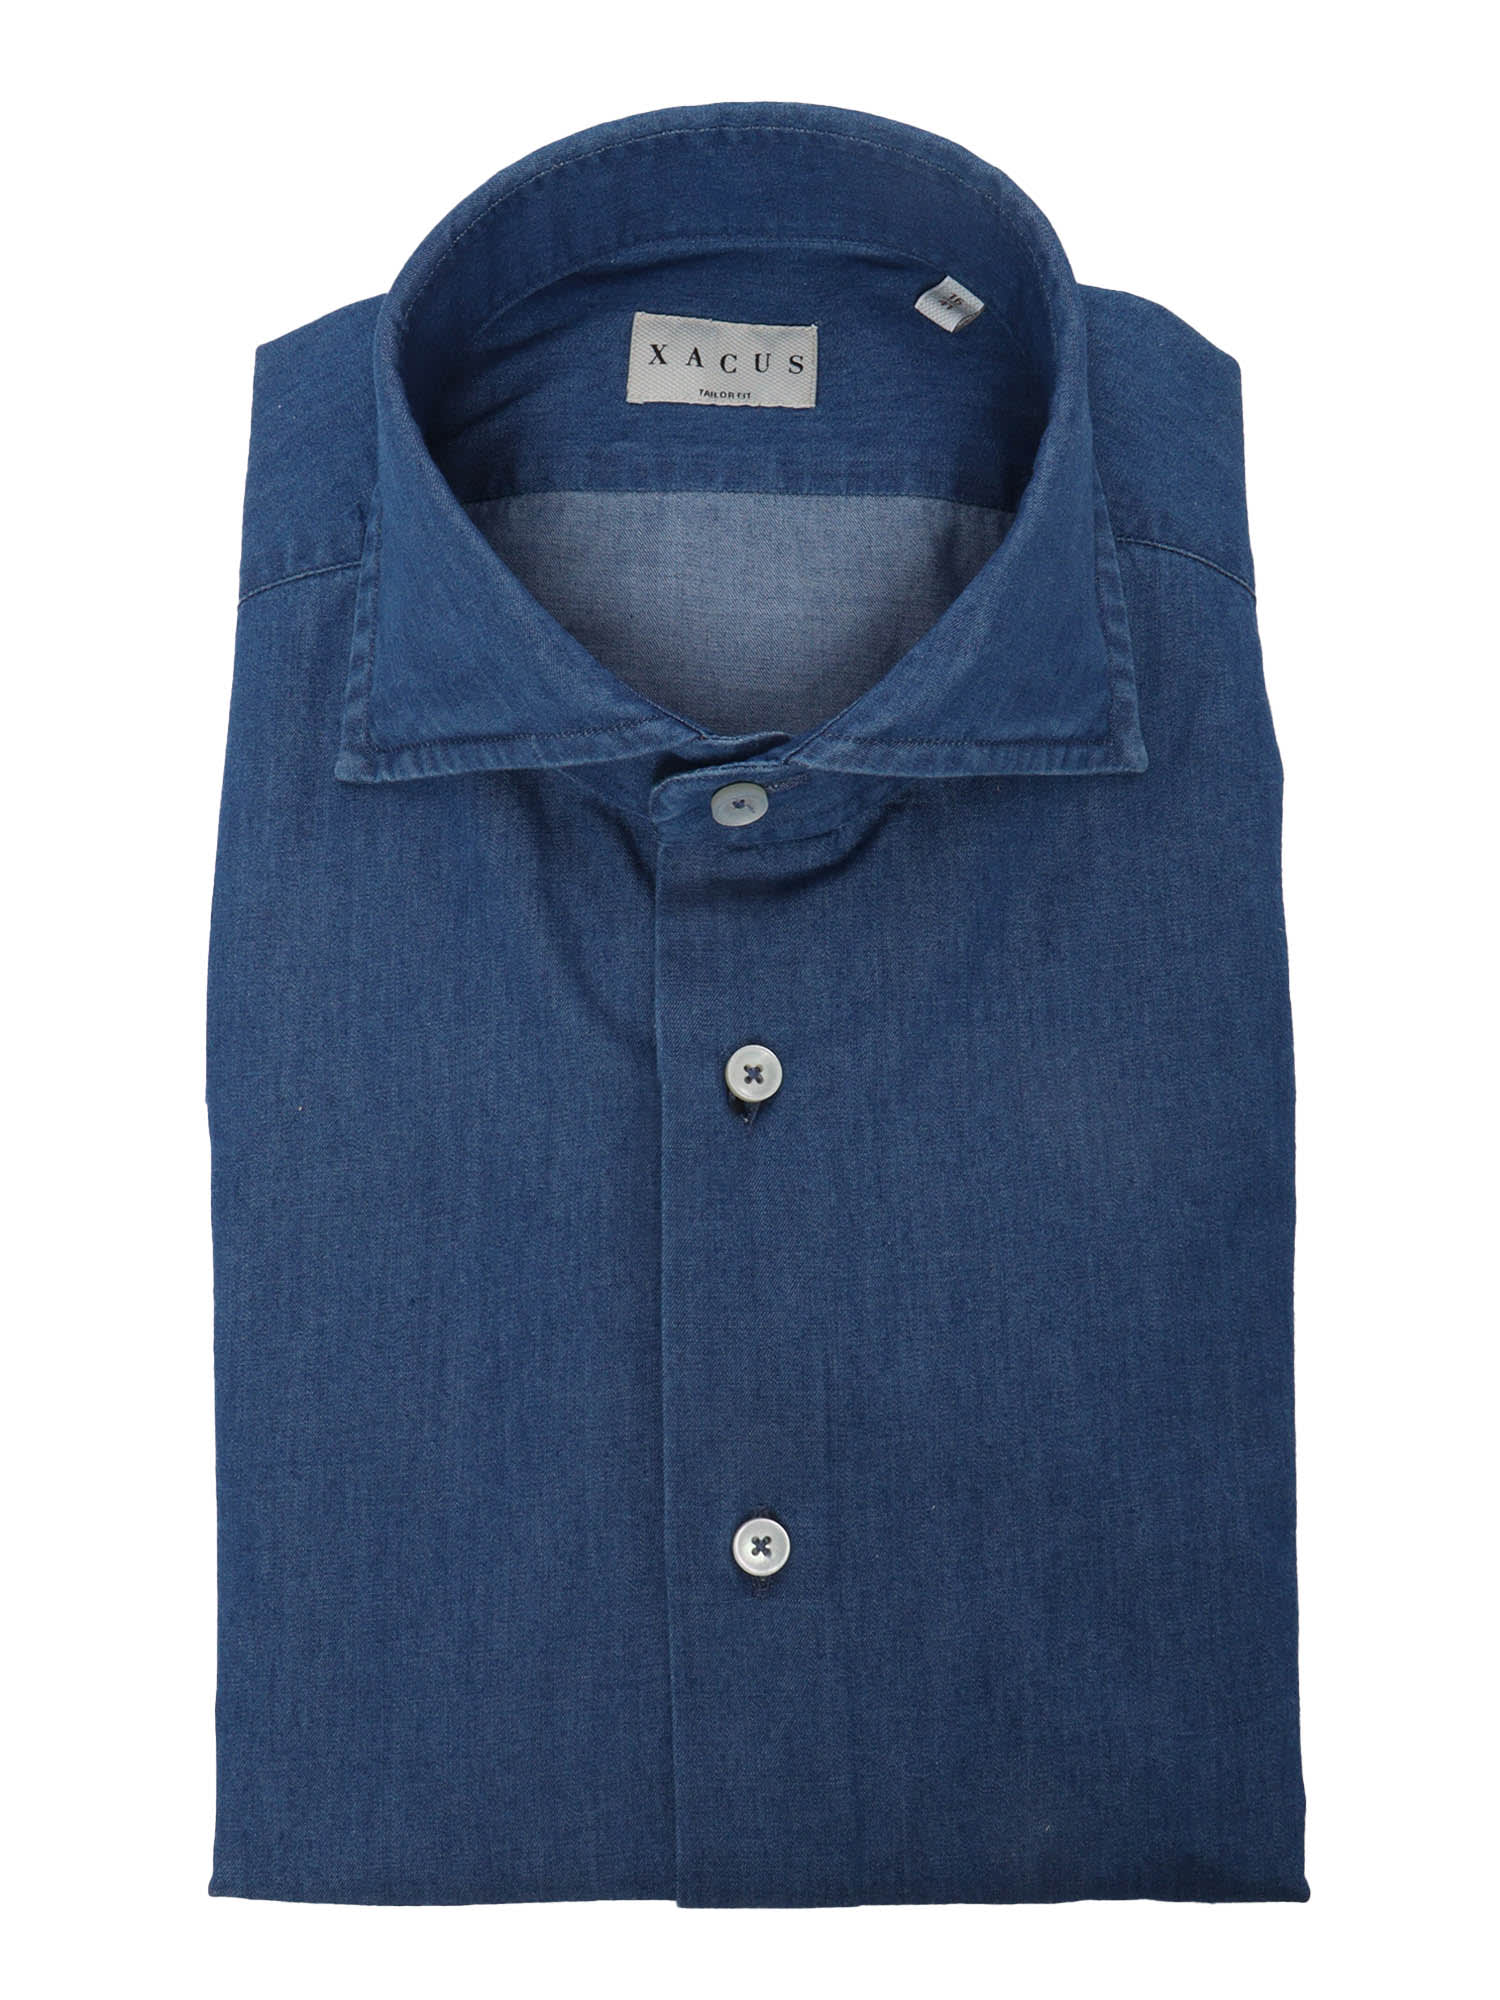 Shop Xacus Blue Cotton Shirt In Multicolor